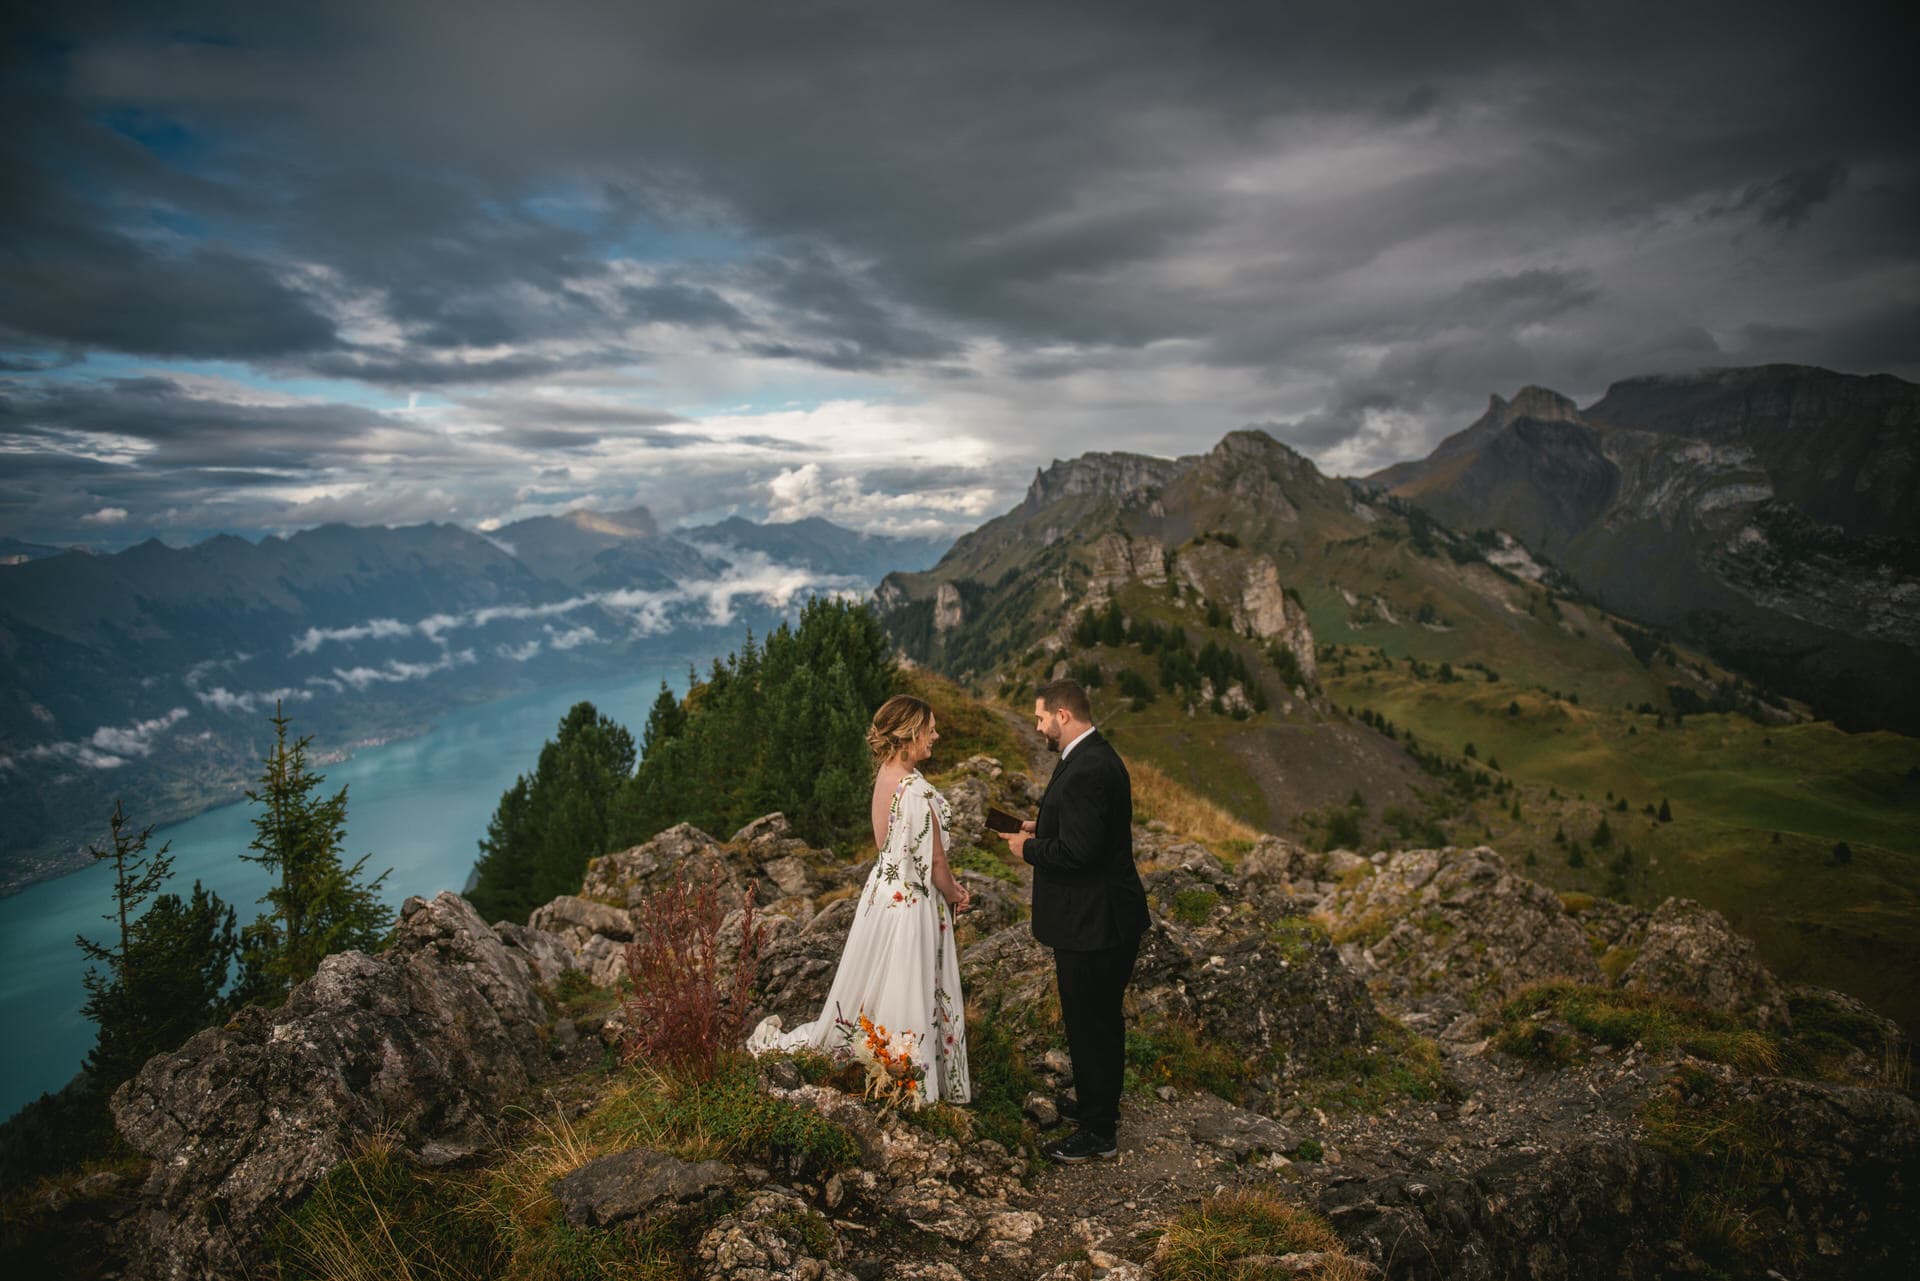 Couple exchanging their vows at Schynigge Platte during their elopement in Switzerland